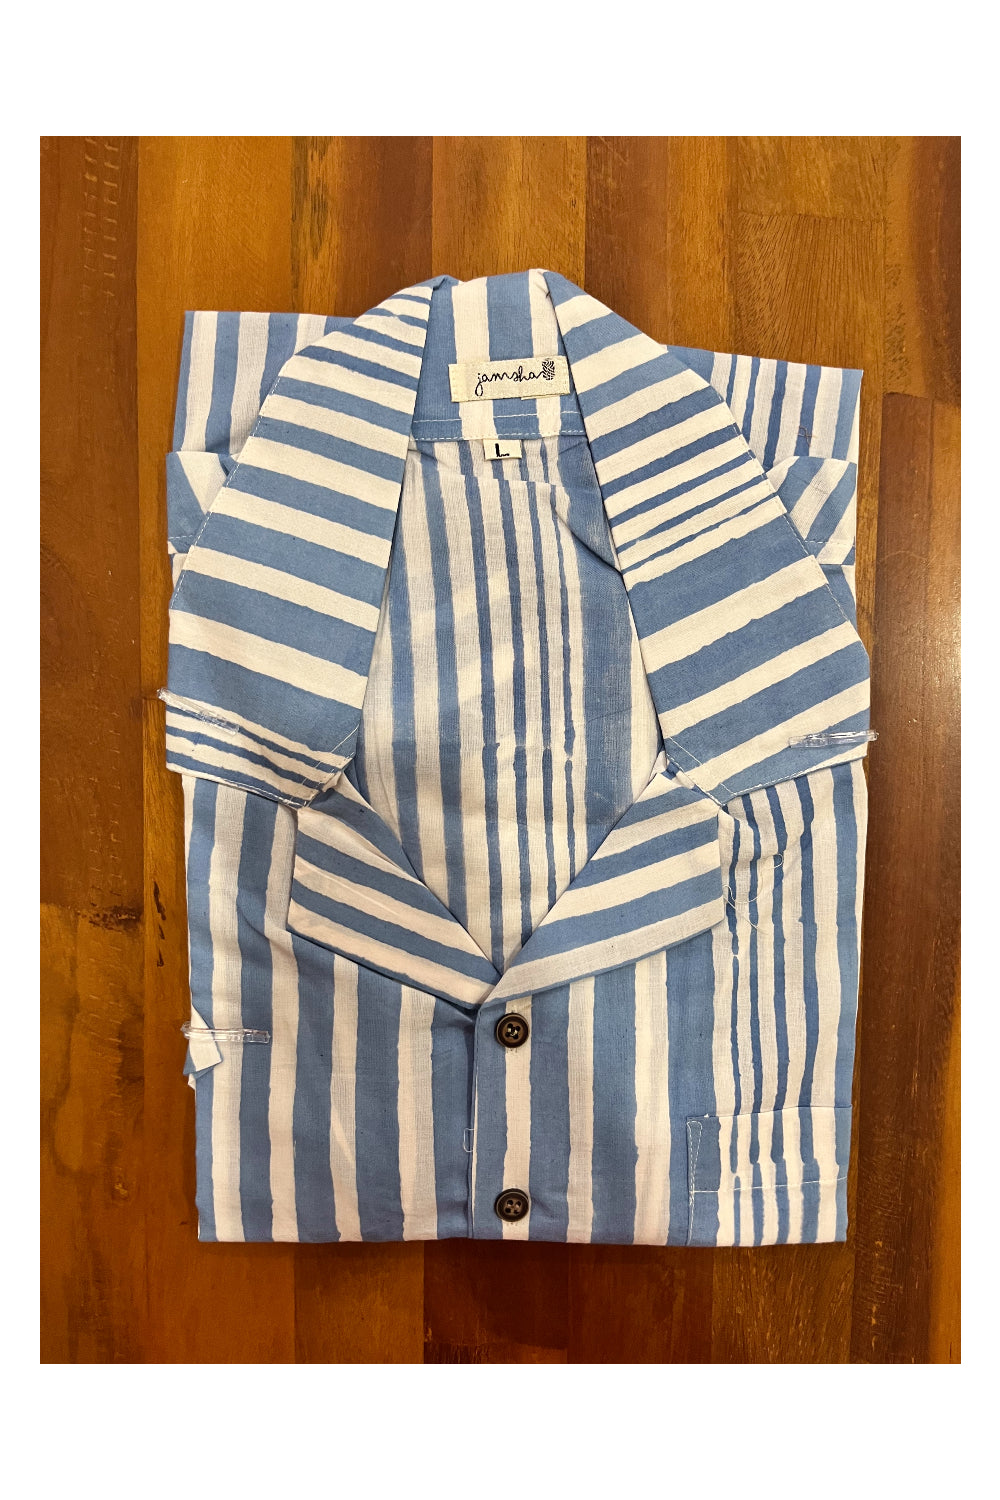 Southloom Jaipur Cotton Blue White Lines Hand Block Printed Cuban Collar Shirt (Half Sleeves)